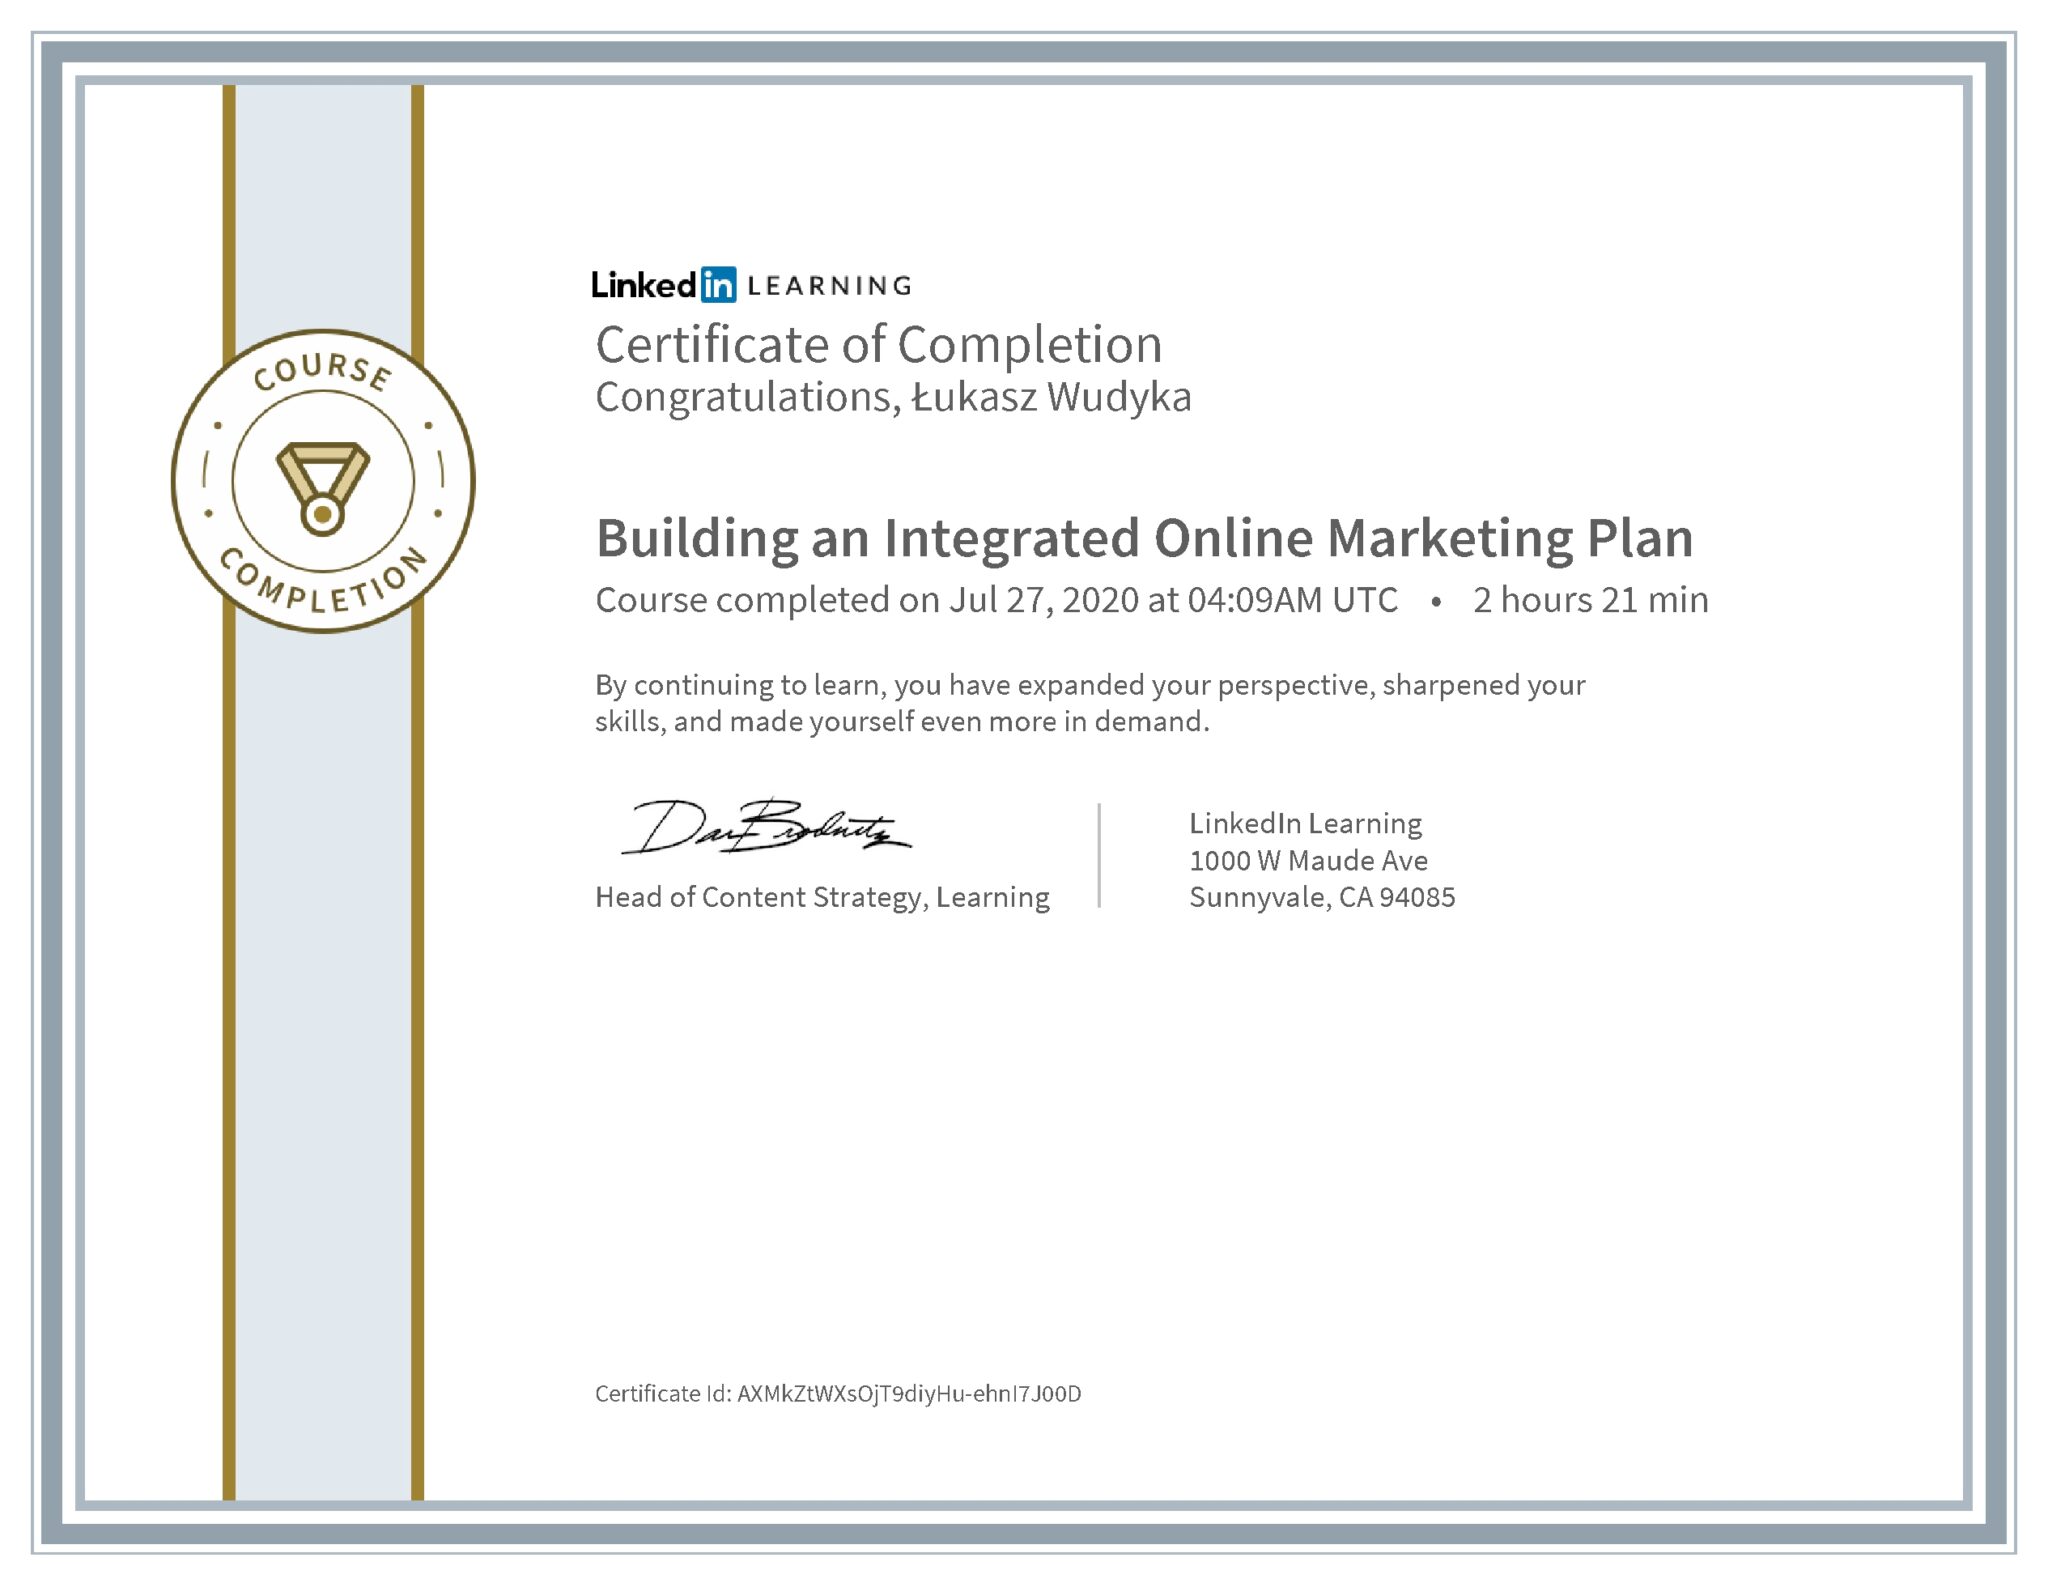 Łukasz Wudyka certyfikat LinkedIn Building an Integrated Online Marketing Plan